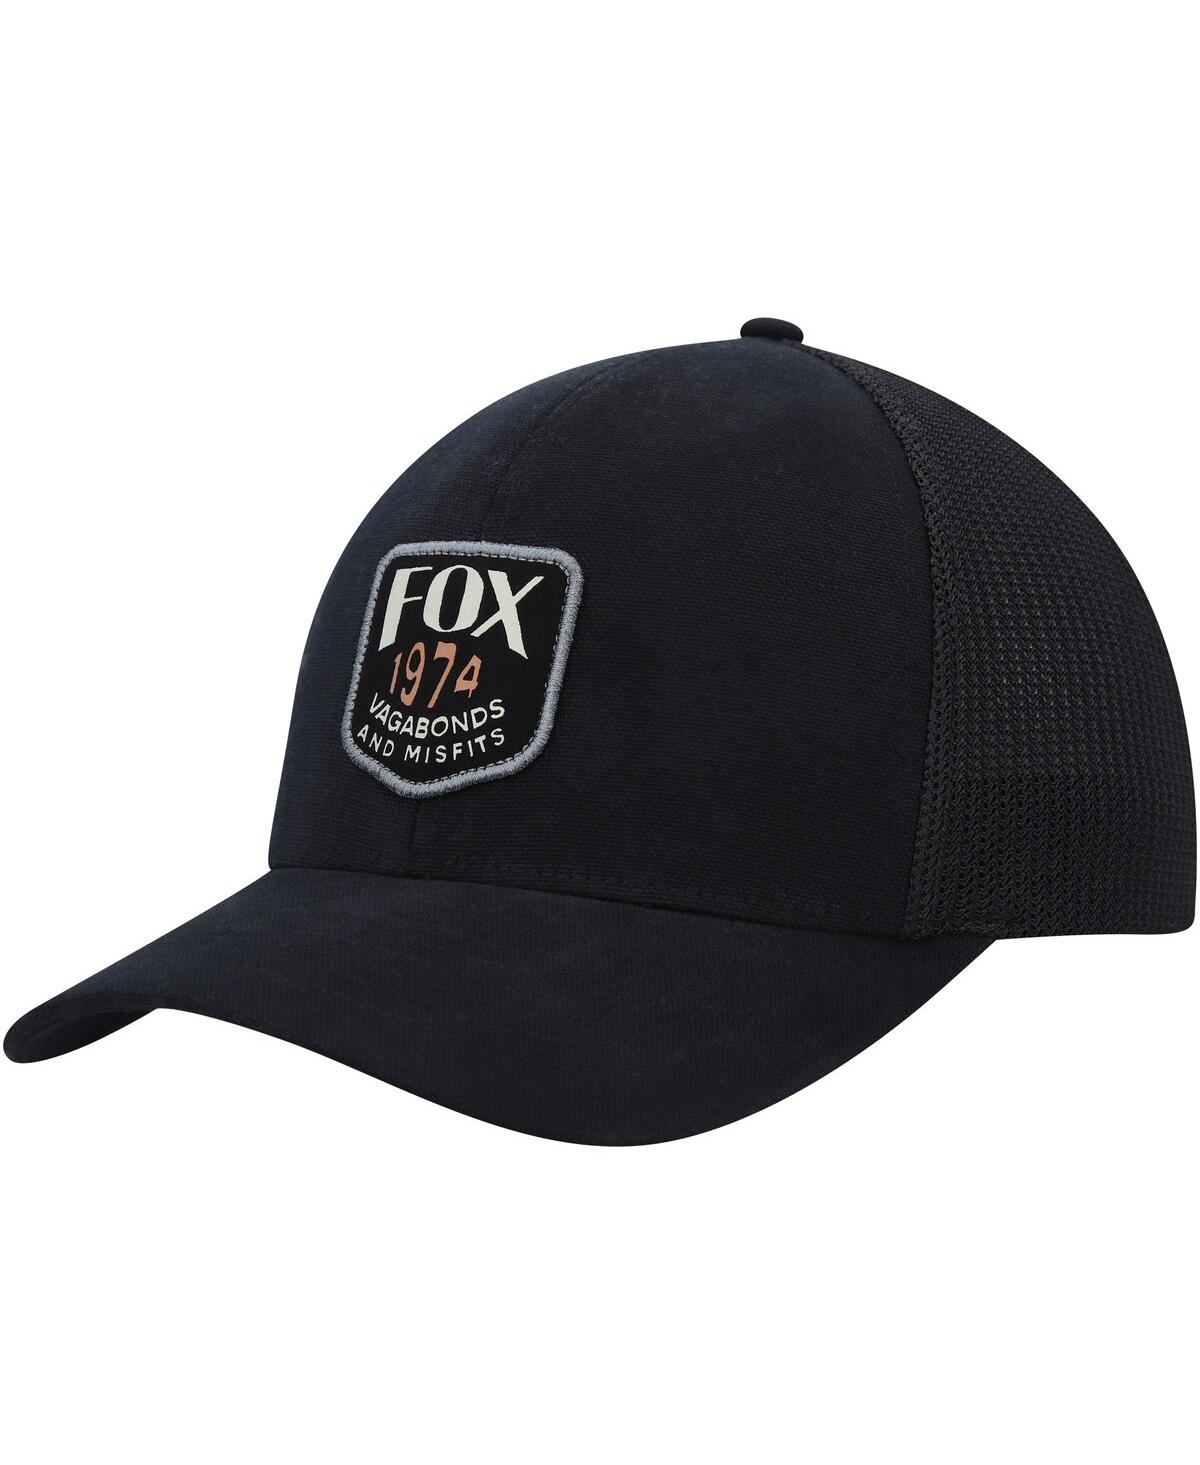 Fox Men's  Black Predominant Mesh Flexfit Flex Hat